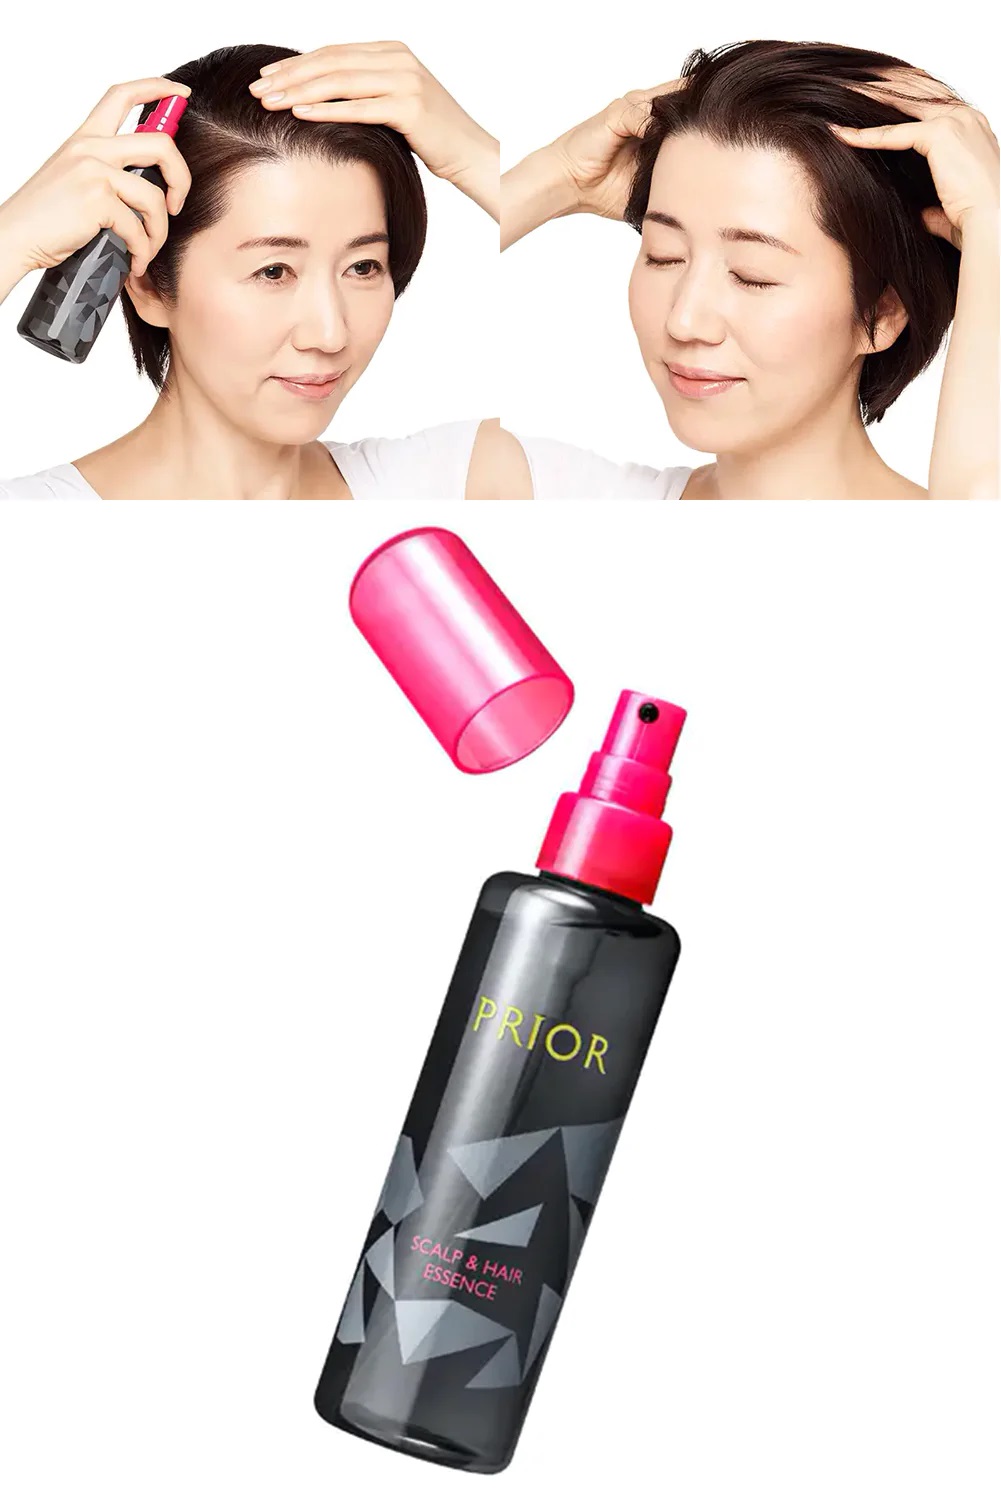 Shiseido PRIOR Scalp & Hair Essence